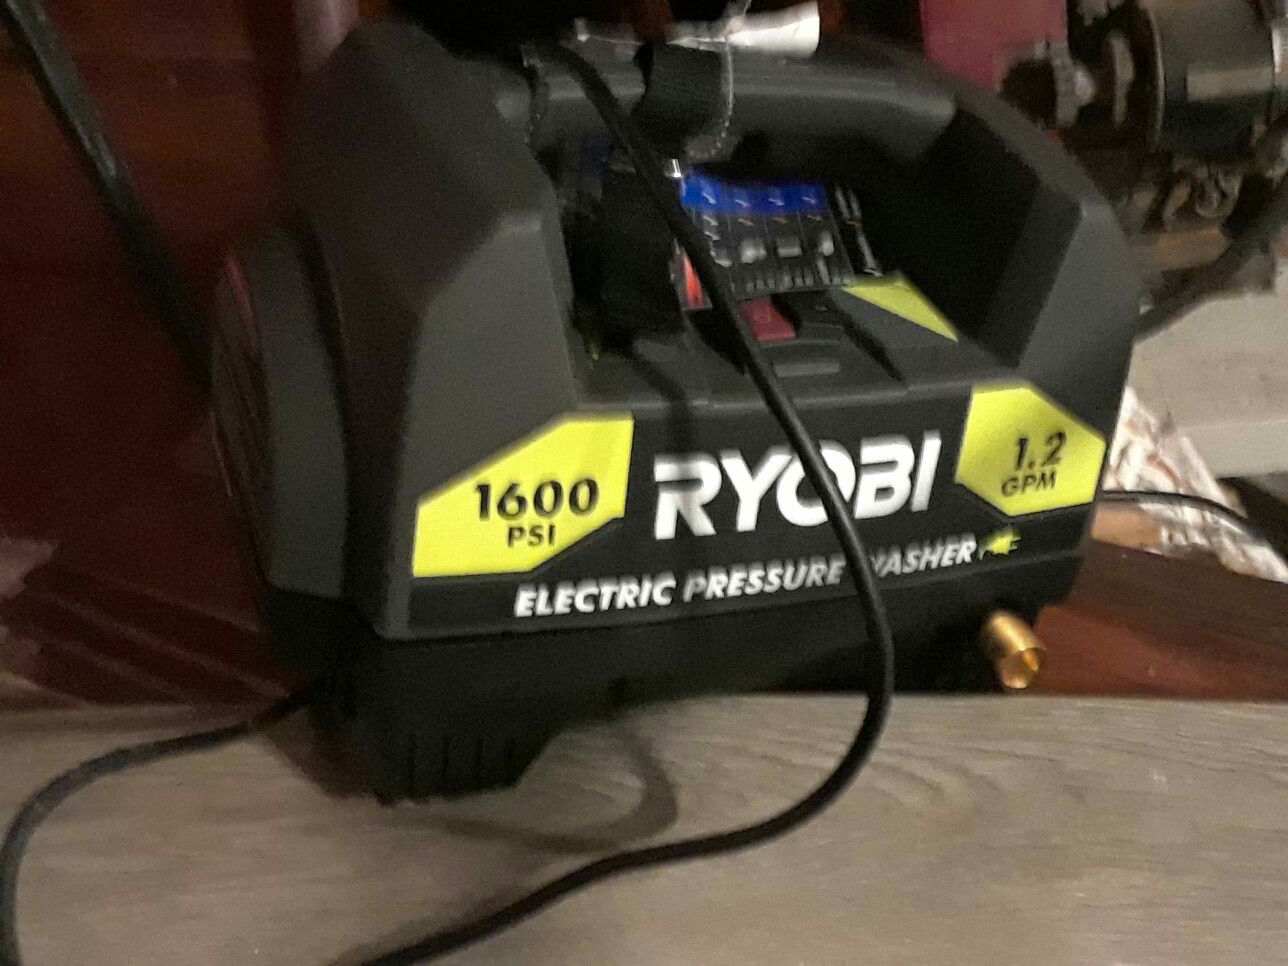 Ryobi electric pressure washer $45